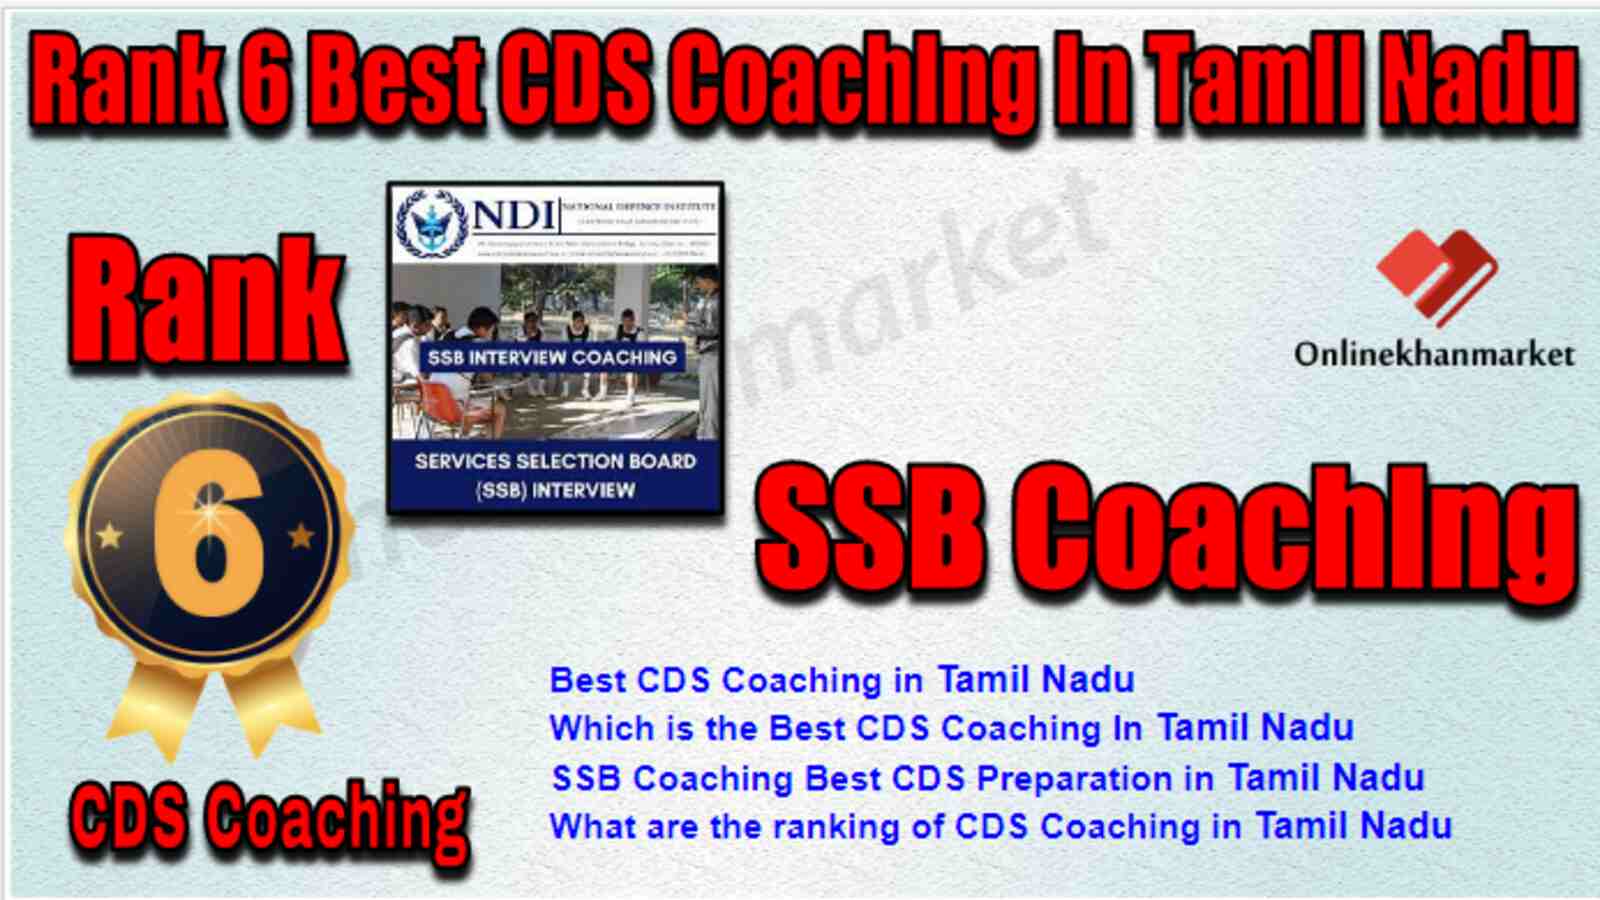 Rank 6 Best CDS Coaching in Tamil Nadu